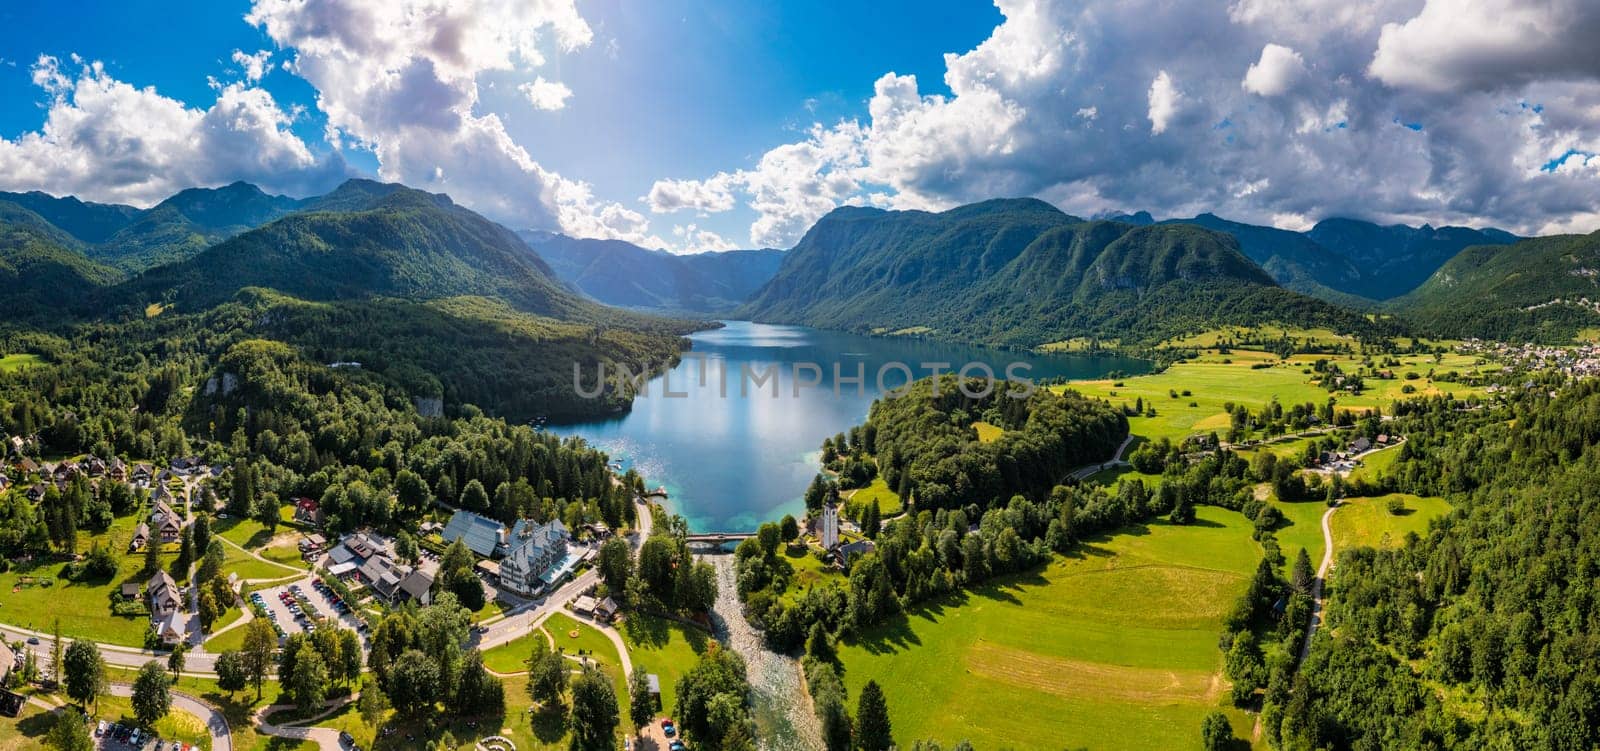 Aerial view of Bohinj lake in Julian Alps. Popular touristic destination in Slovenia. Bohinj Lake, Church of St John the Baptist. Triglav National Park, Julian Alps, Slovenia. 